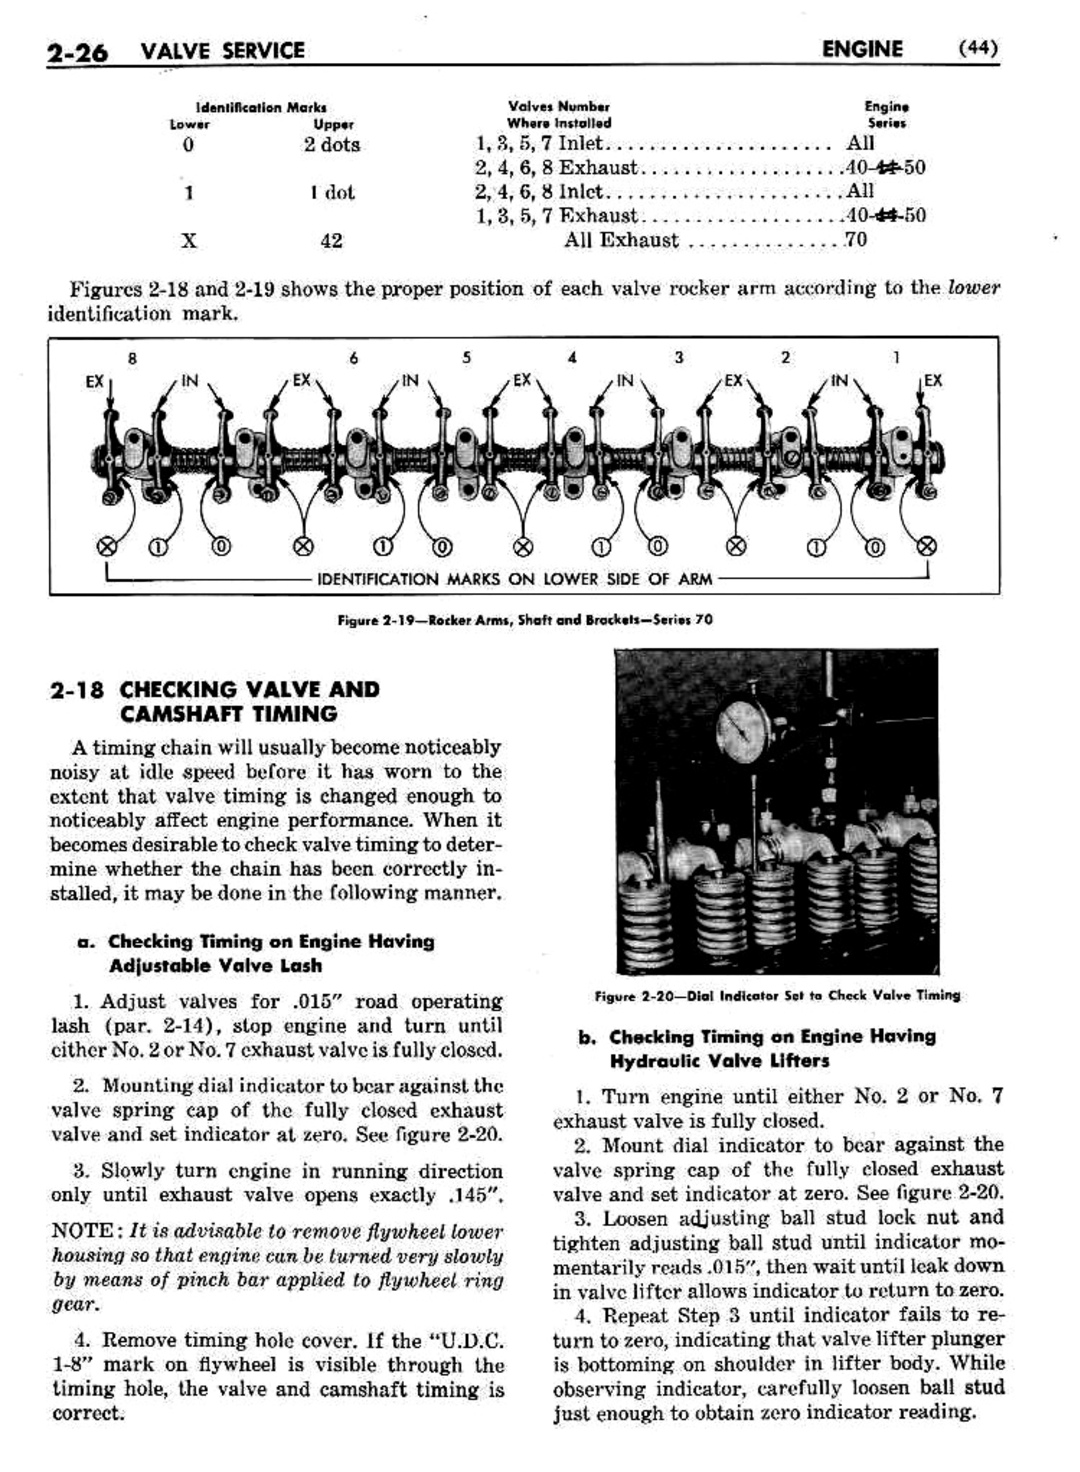 n_03 1951 Buick Shop Manual - Engine-026-026.jpg